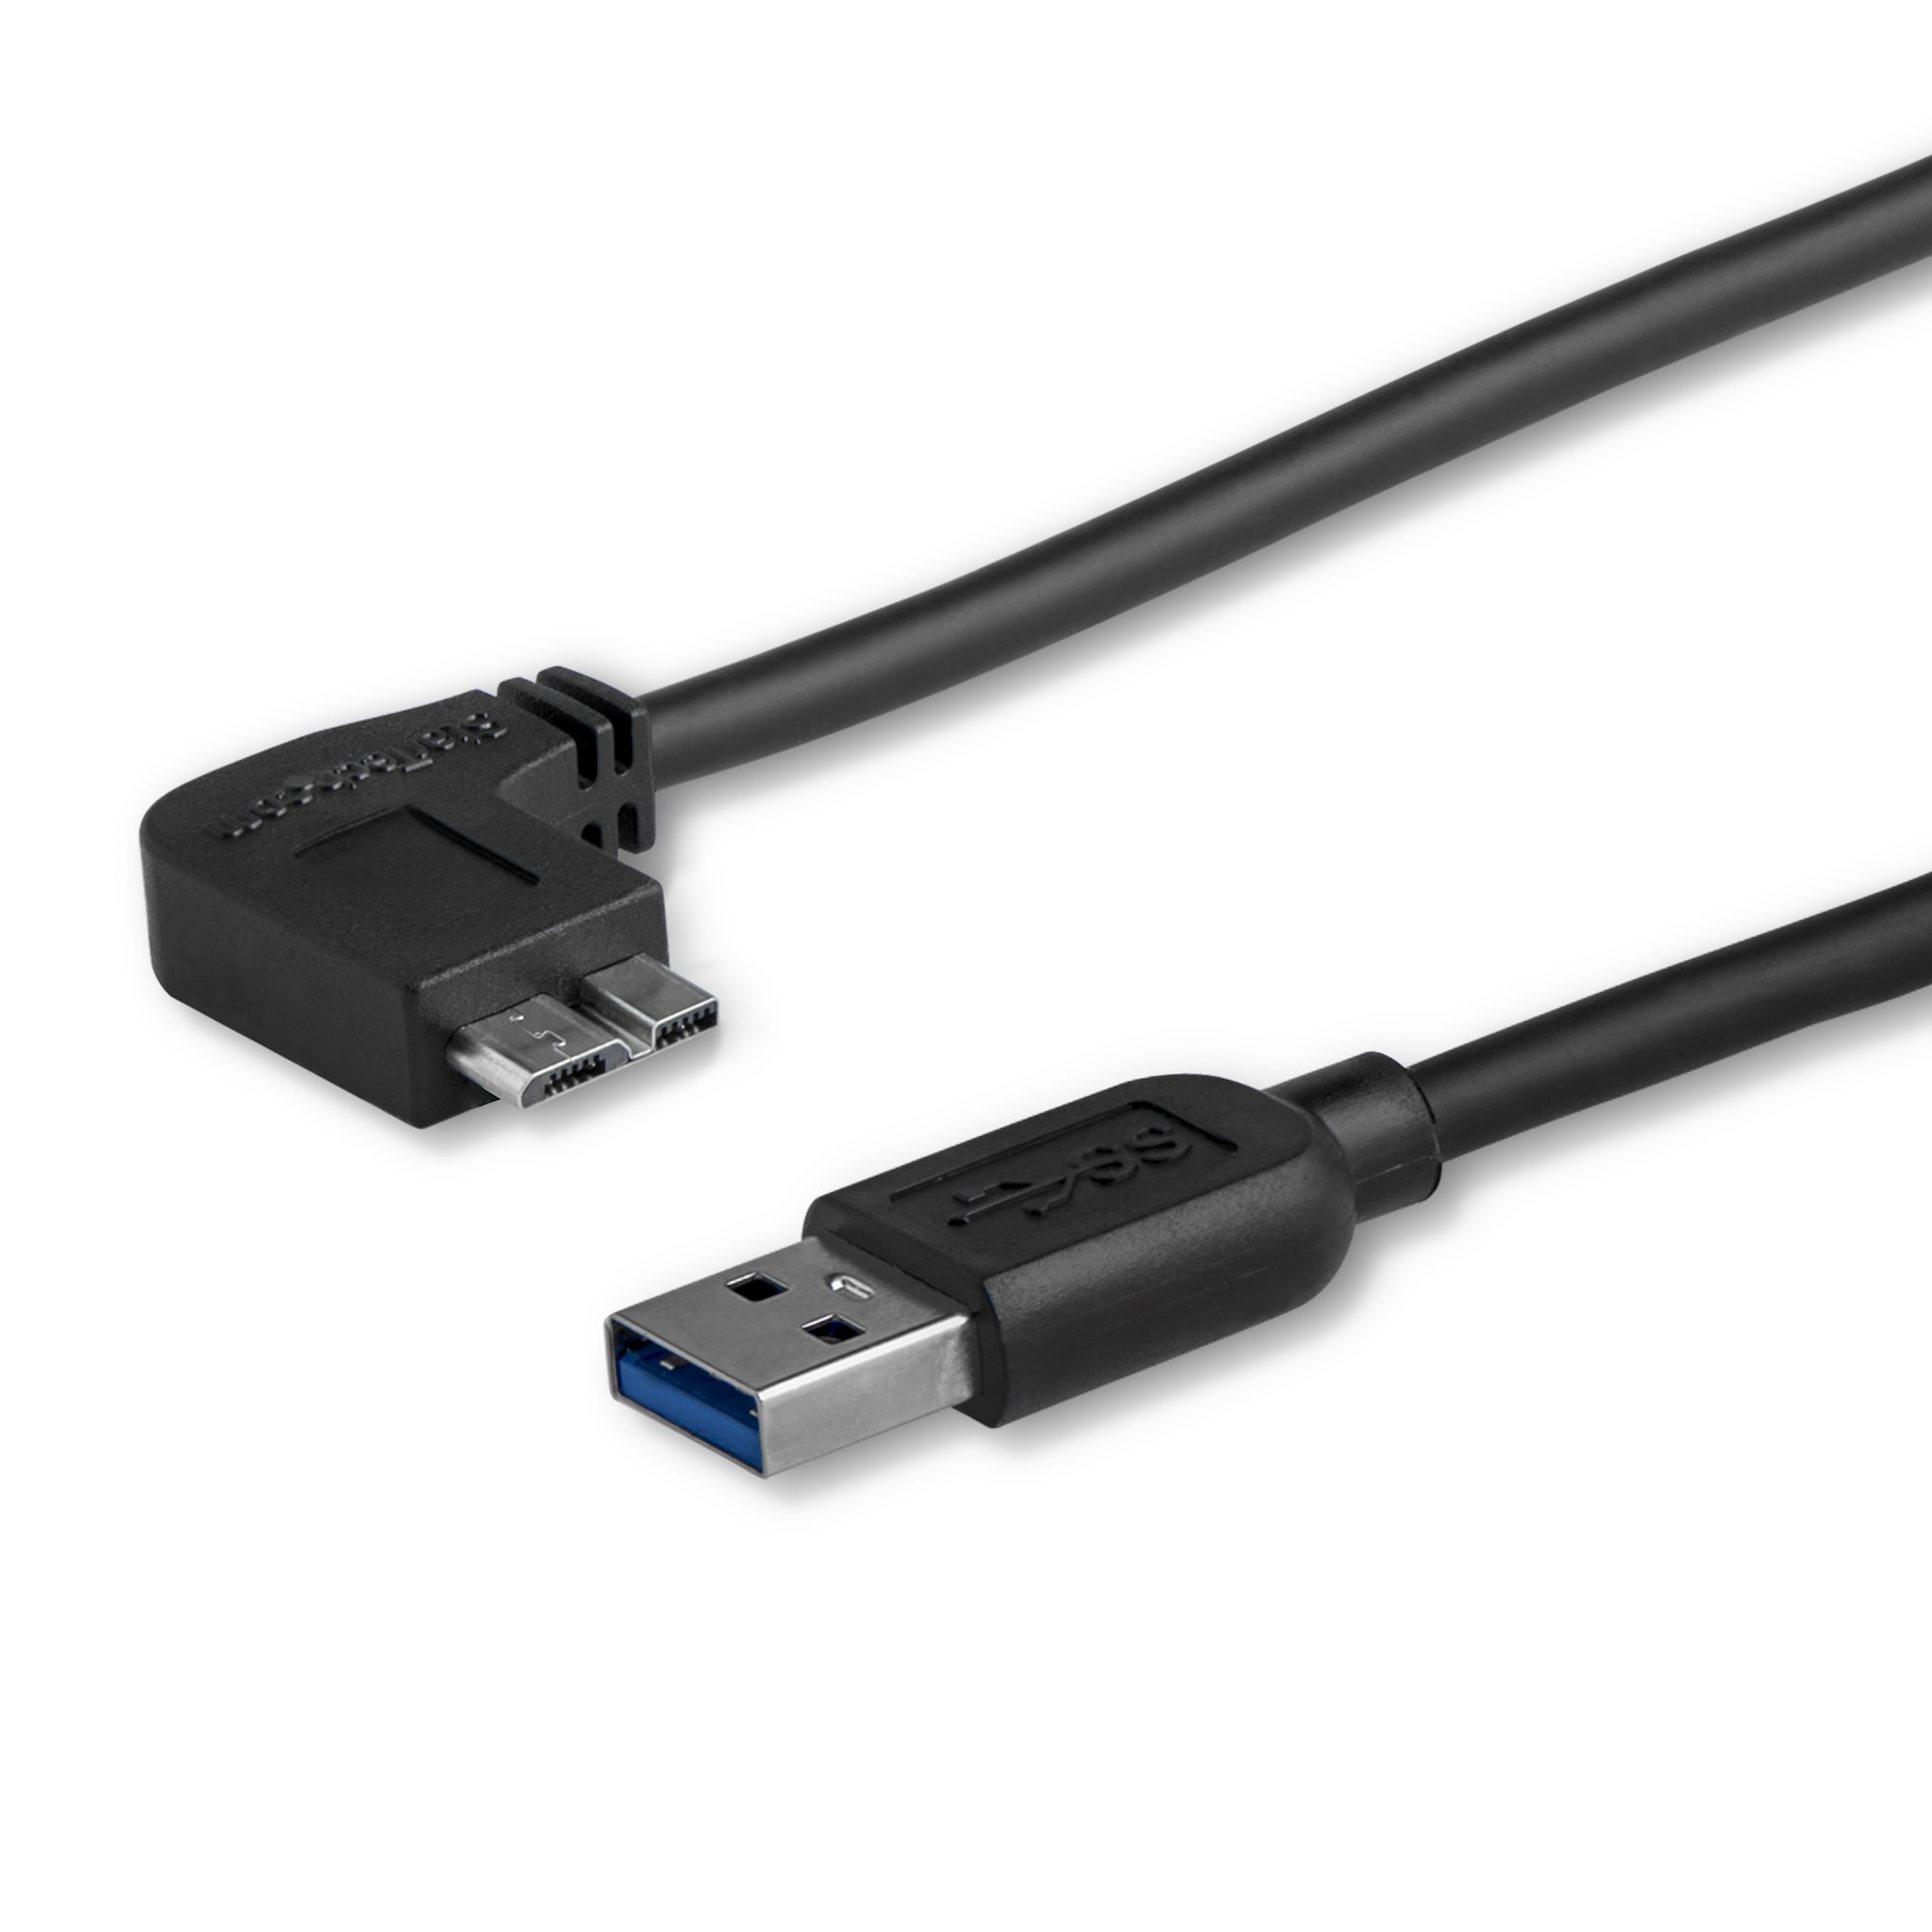 Geometri Hurtig molekyle 2m 6ft Slim Micro USB 3.0 Cable - M/M - USB 3.0 Cables | StarTech.com